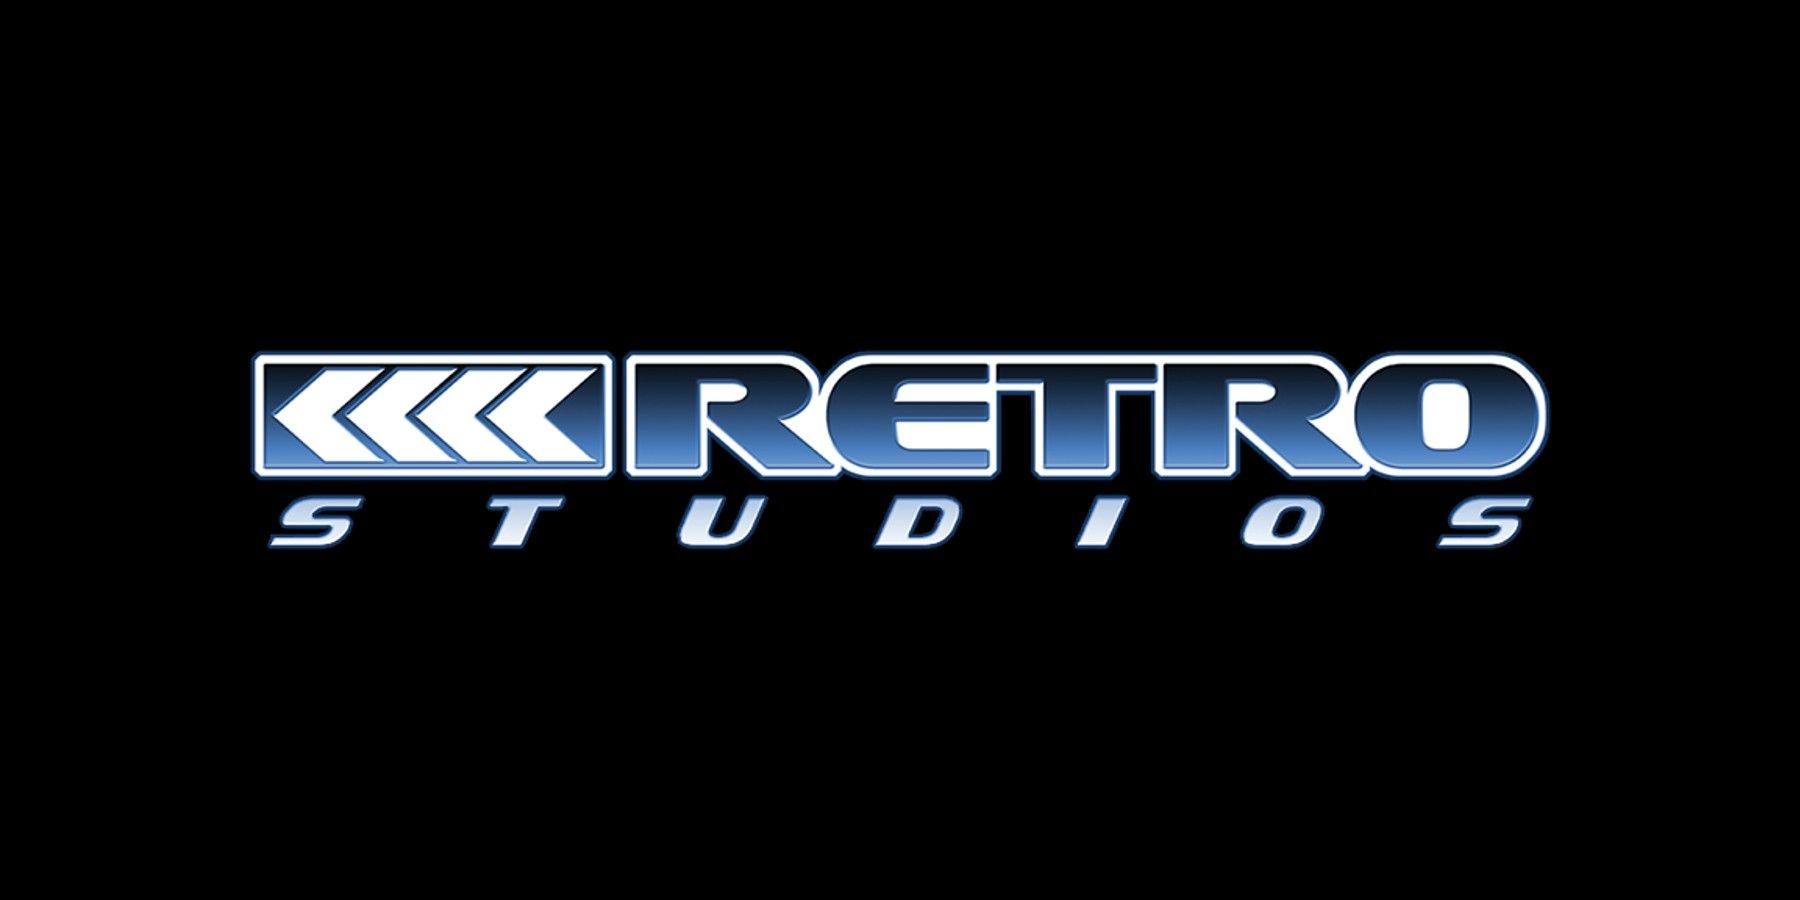 retro studios logo black background